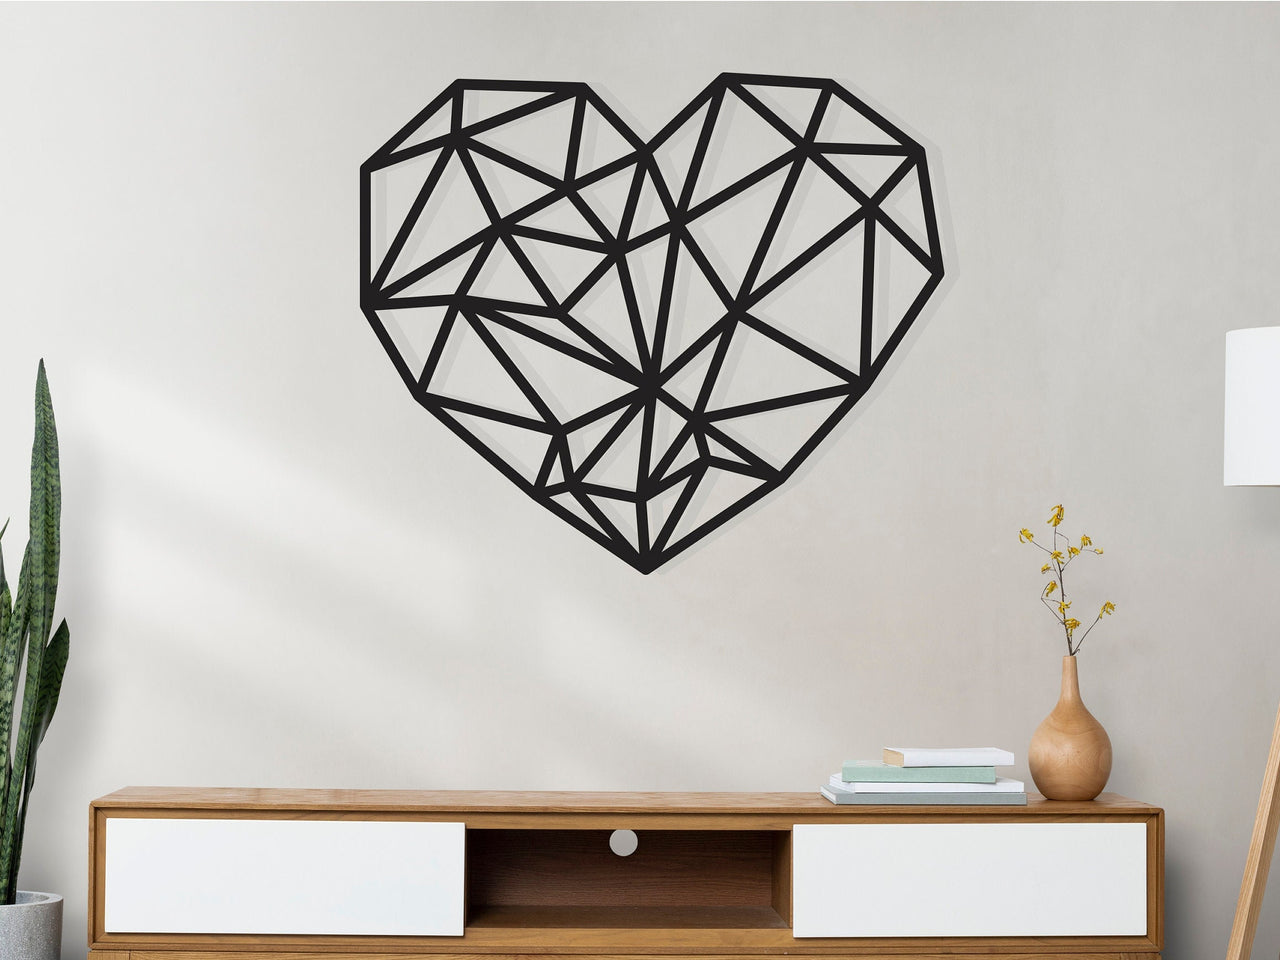 Heart Wall Decor - Heart Wall Art - Geometric Wall Art - Valentines Decor - Love Wall Art - Heart Sign Home Decor for Bedroom